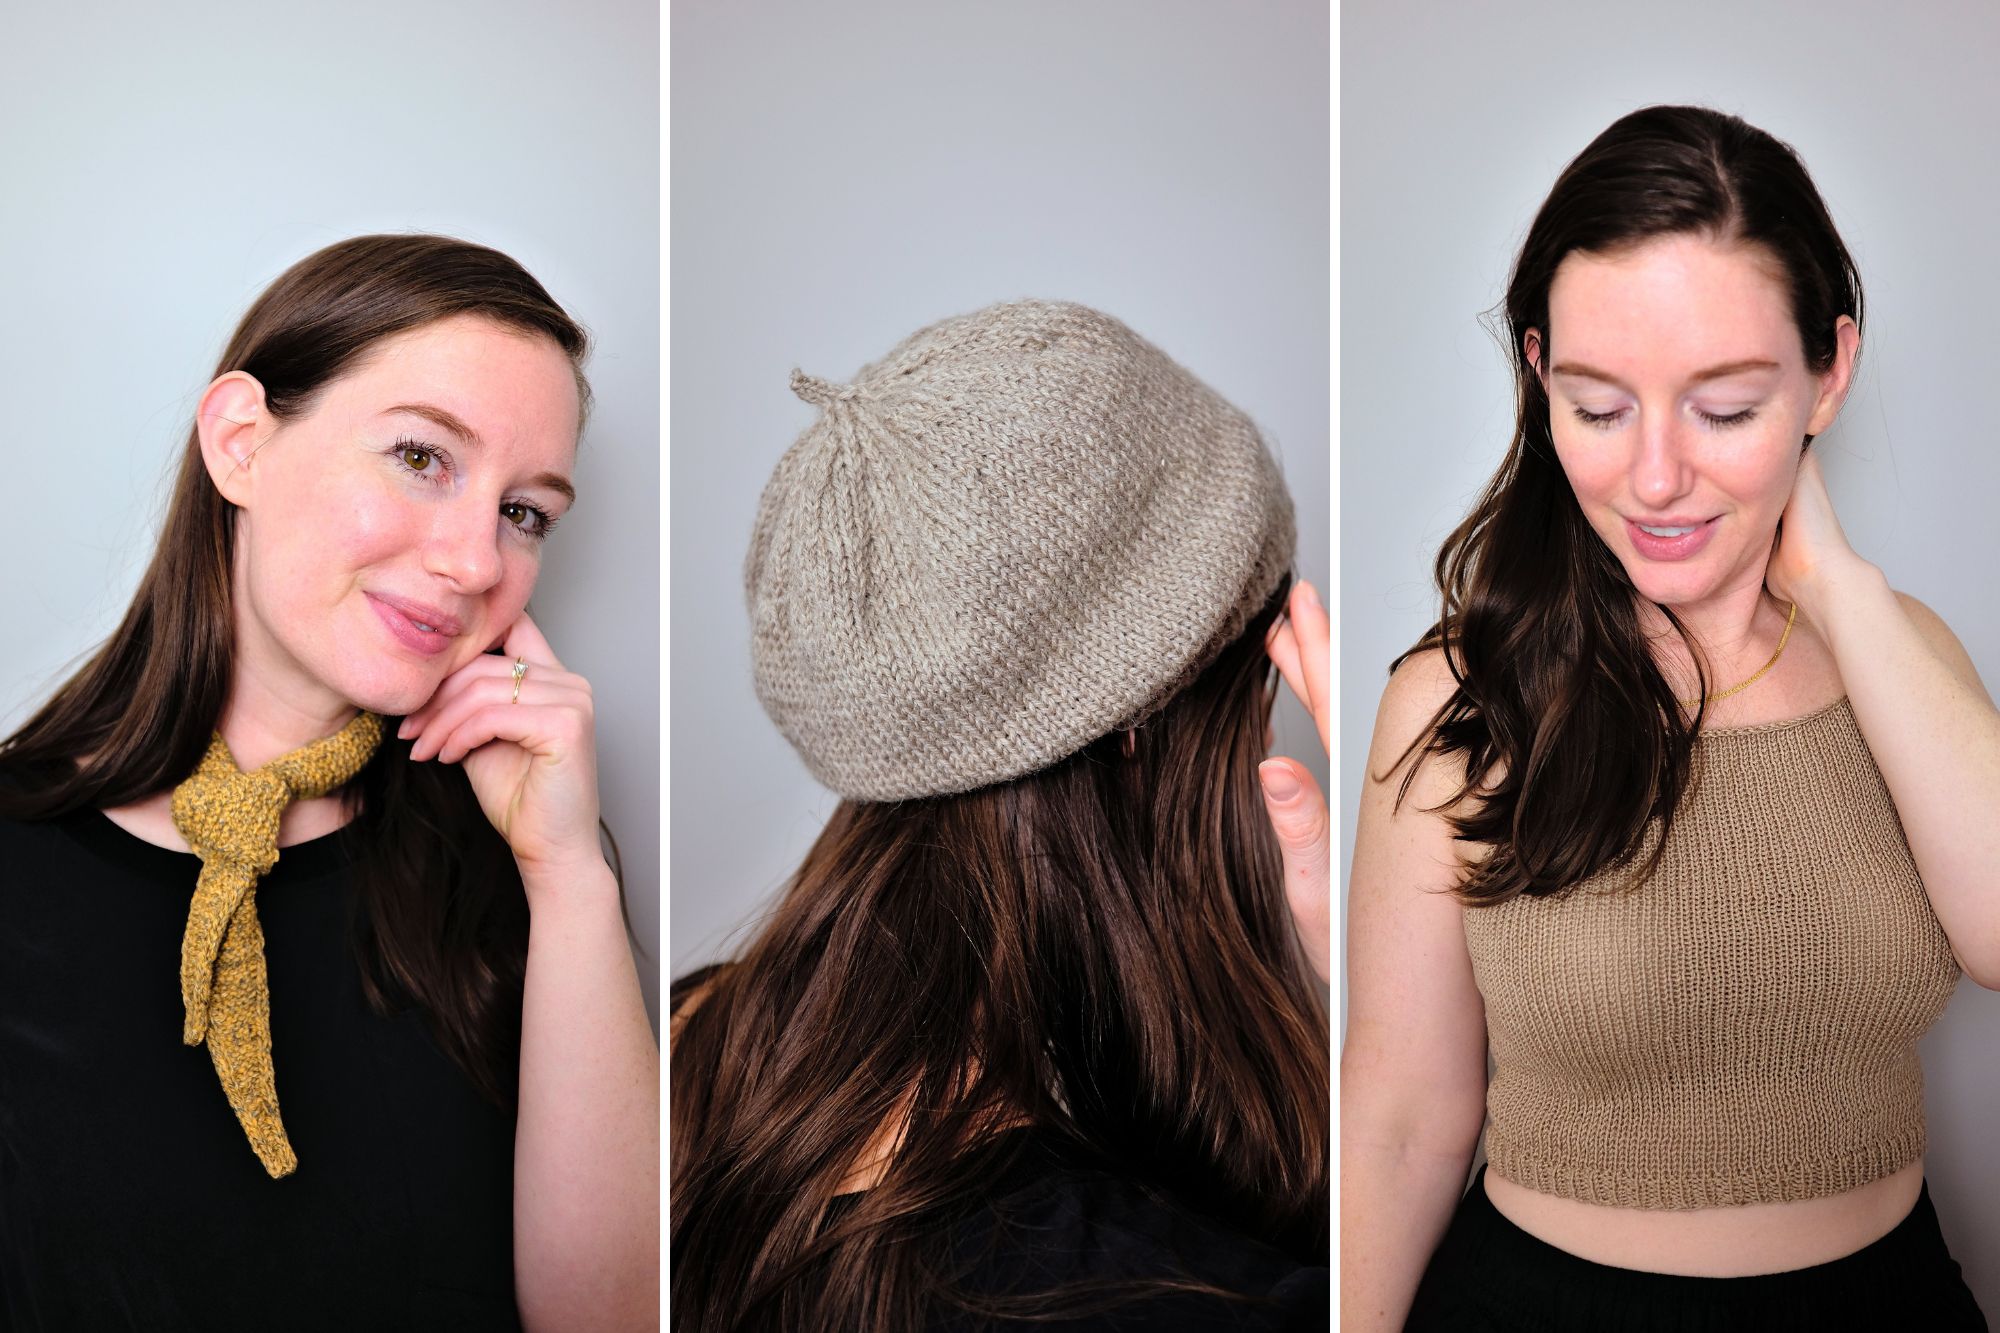 Alyssa wears all three road trip knitting projects in three photos